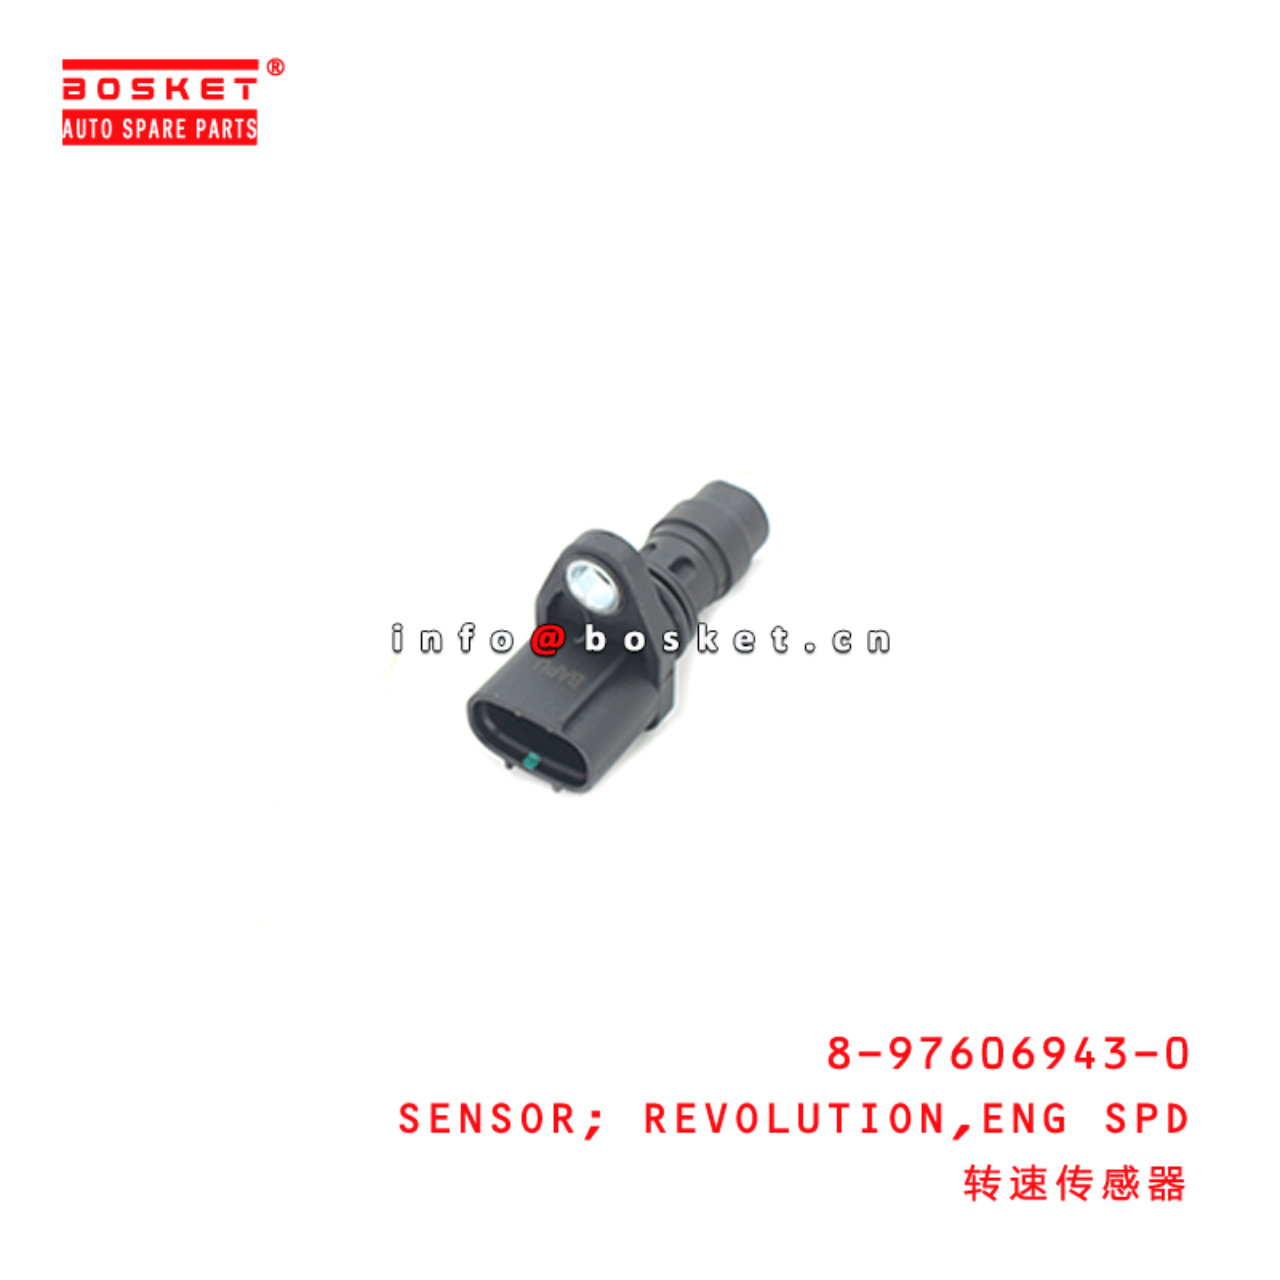  8-97606943-0 Engine Speed Revolution Sensor 8976069430 Suitable for ISUZU ELF 4HK1